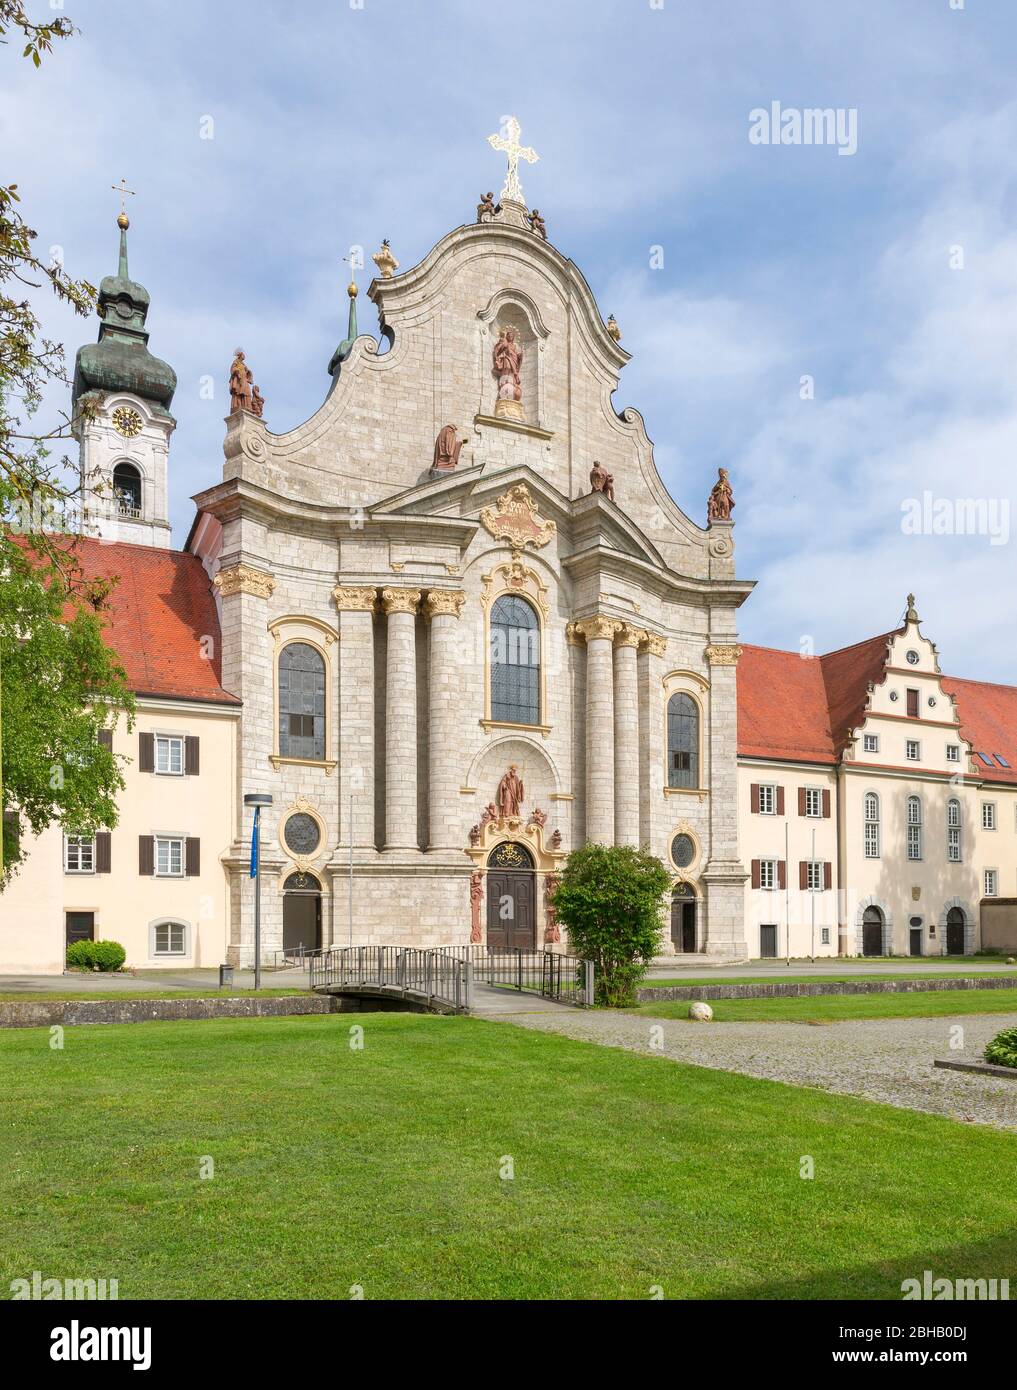 Allemagne, Bade-Wurtemberg, Zwiefalten, monastère de Zwiefalten, Münster, façade ouest en travertin de Gauinger Banque D'Images